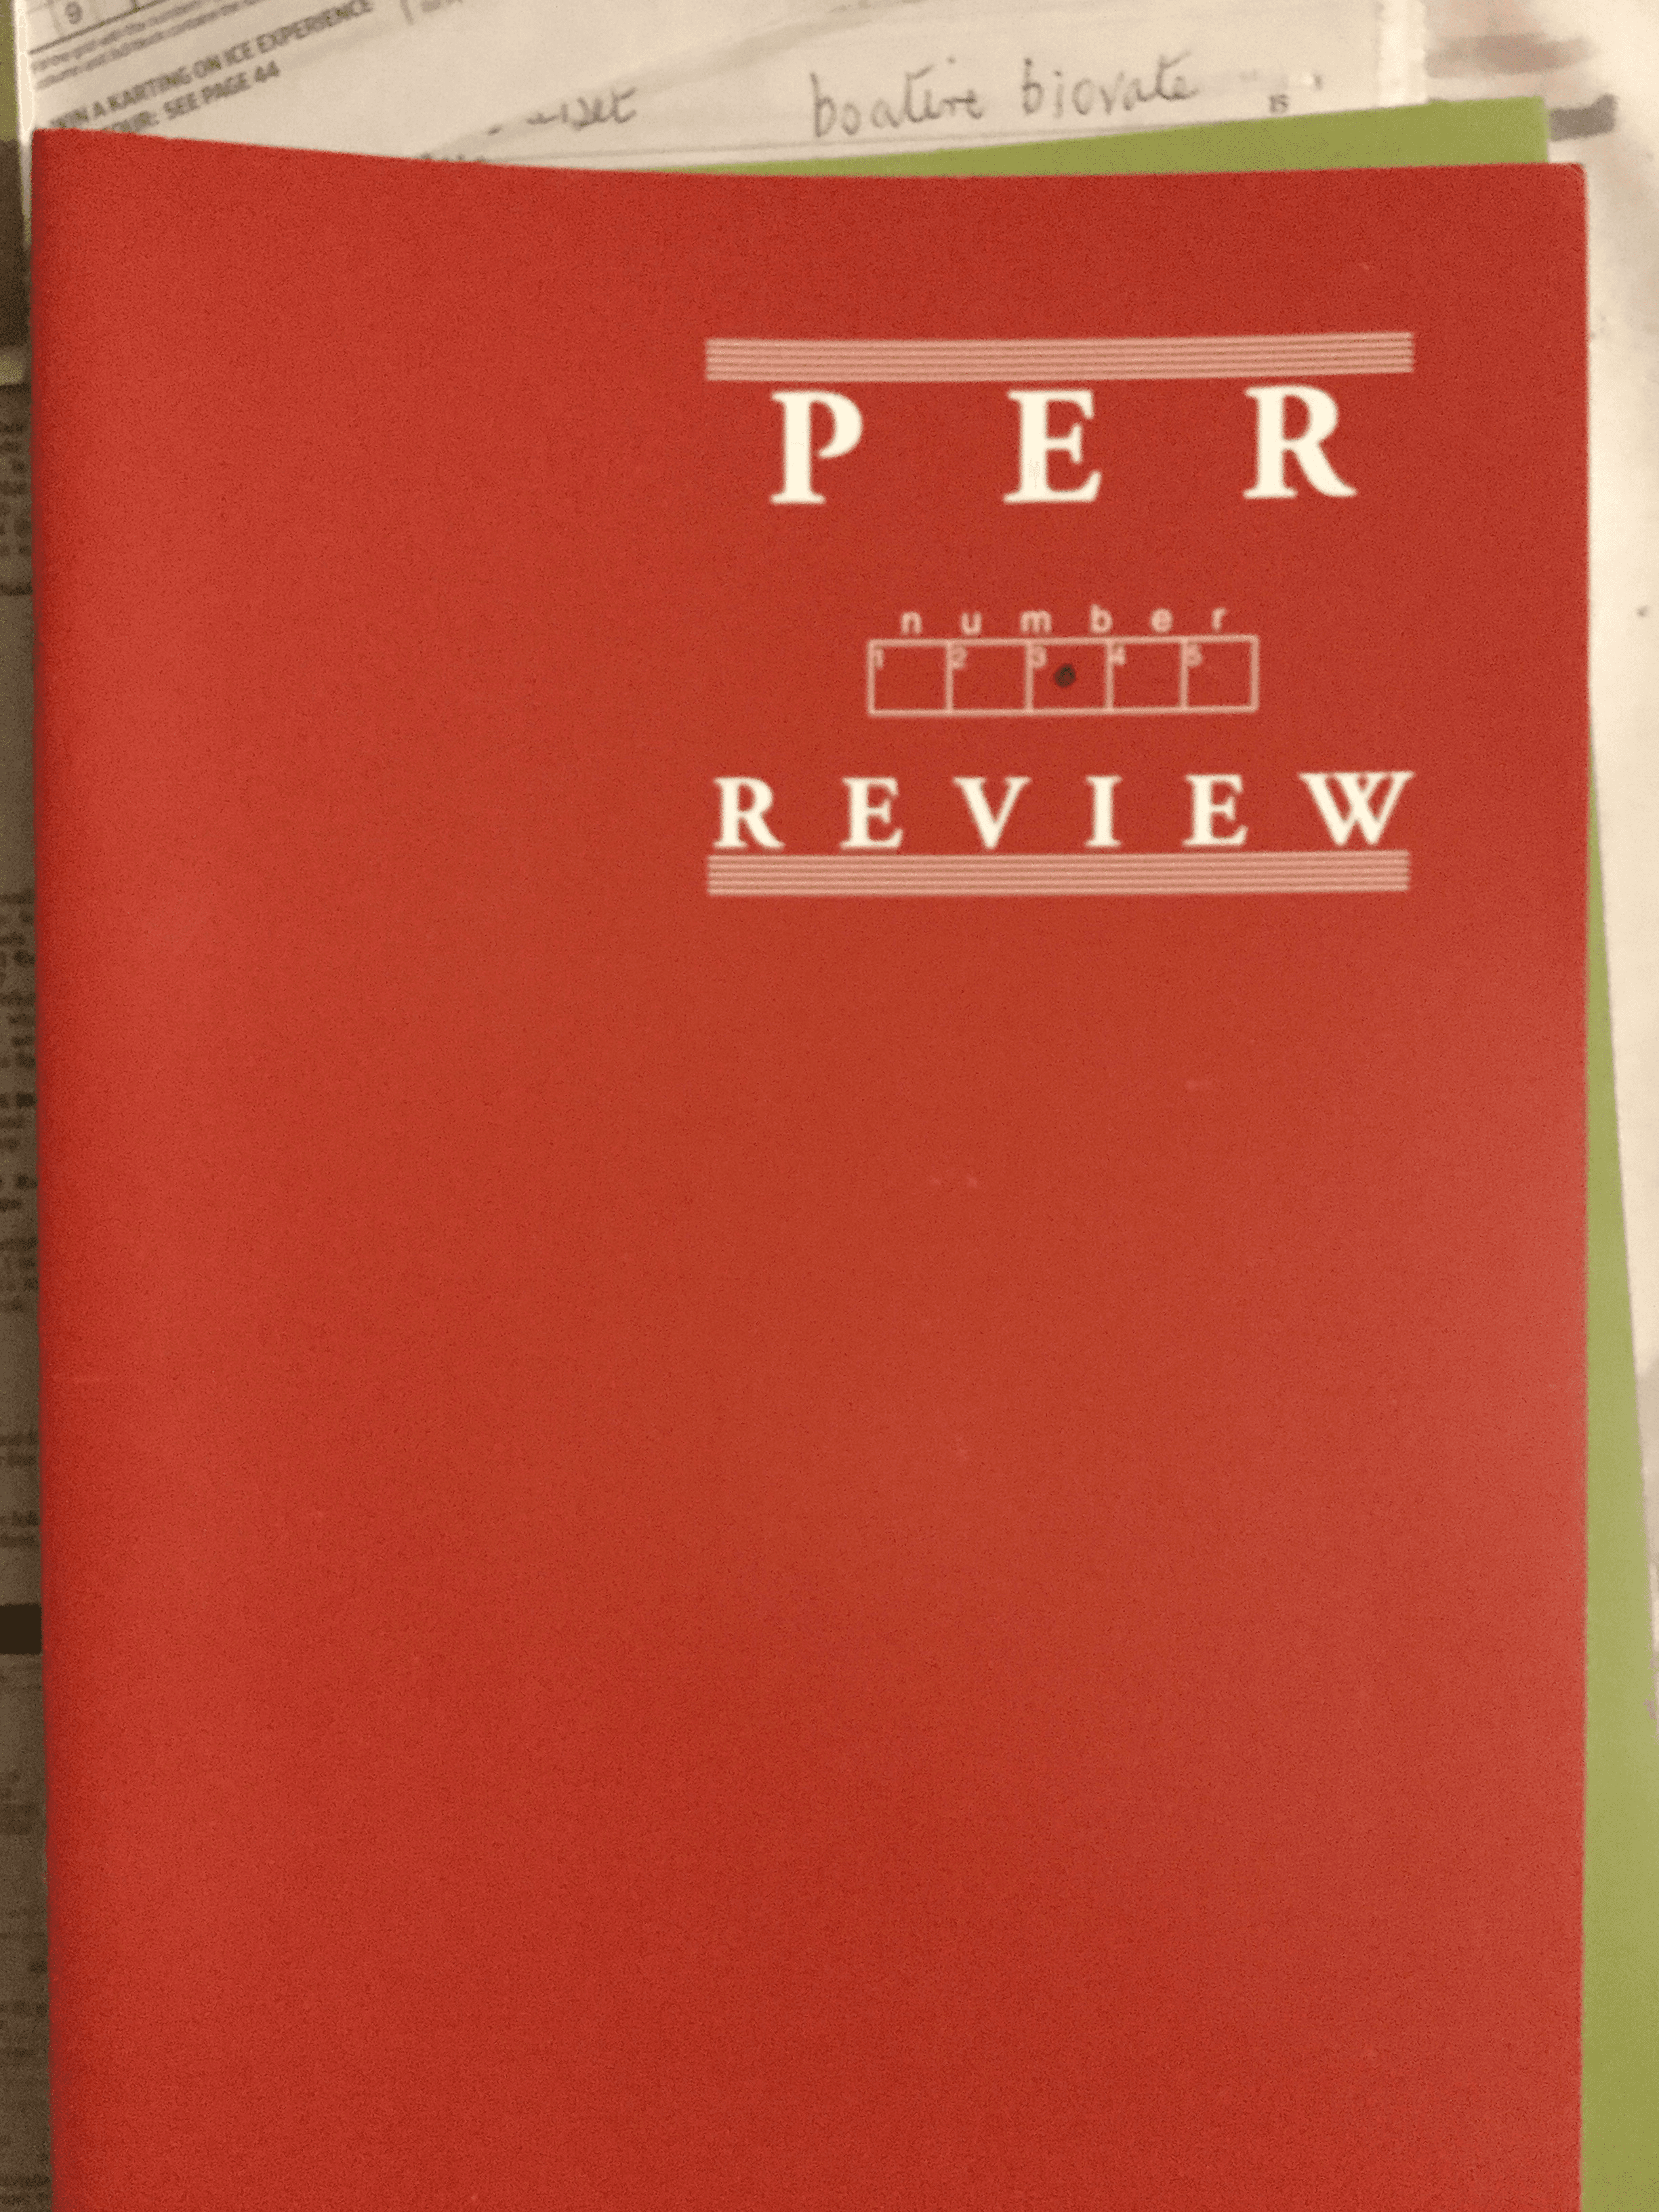 PER review book